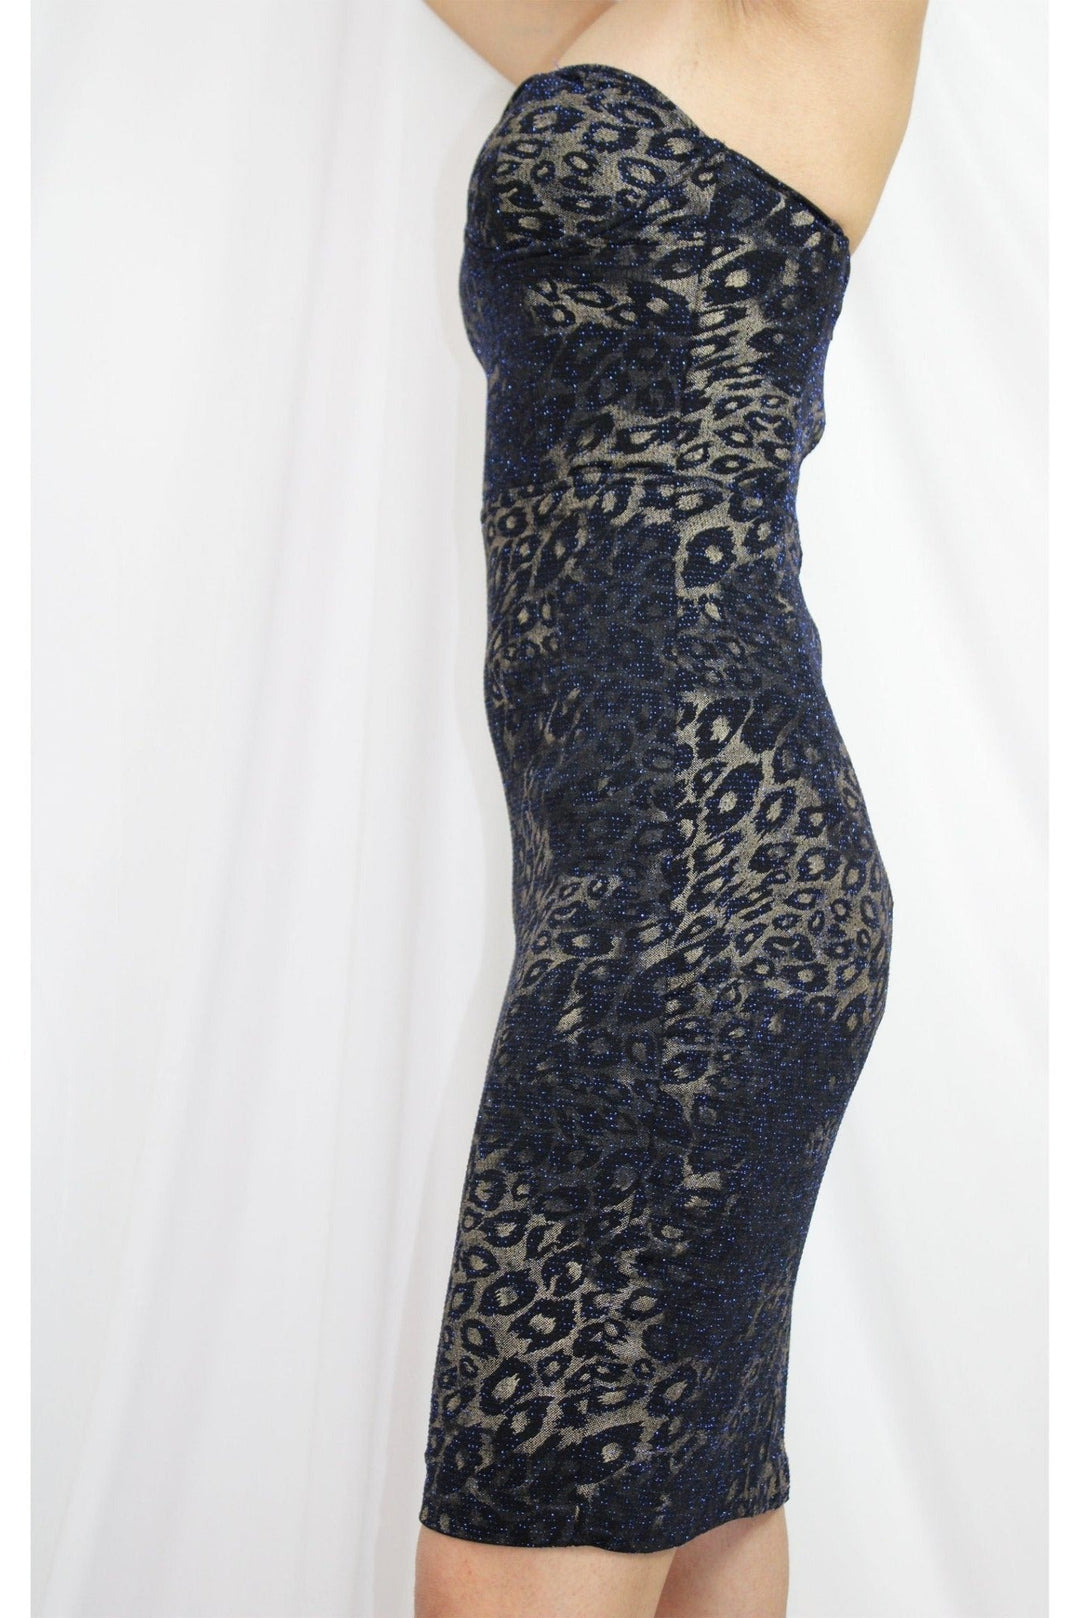 Evening wear leopard shimmer dress